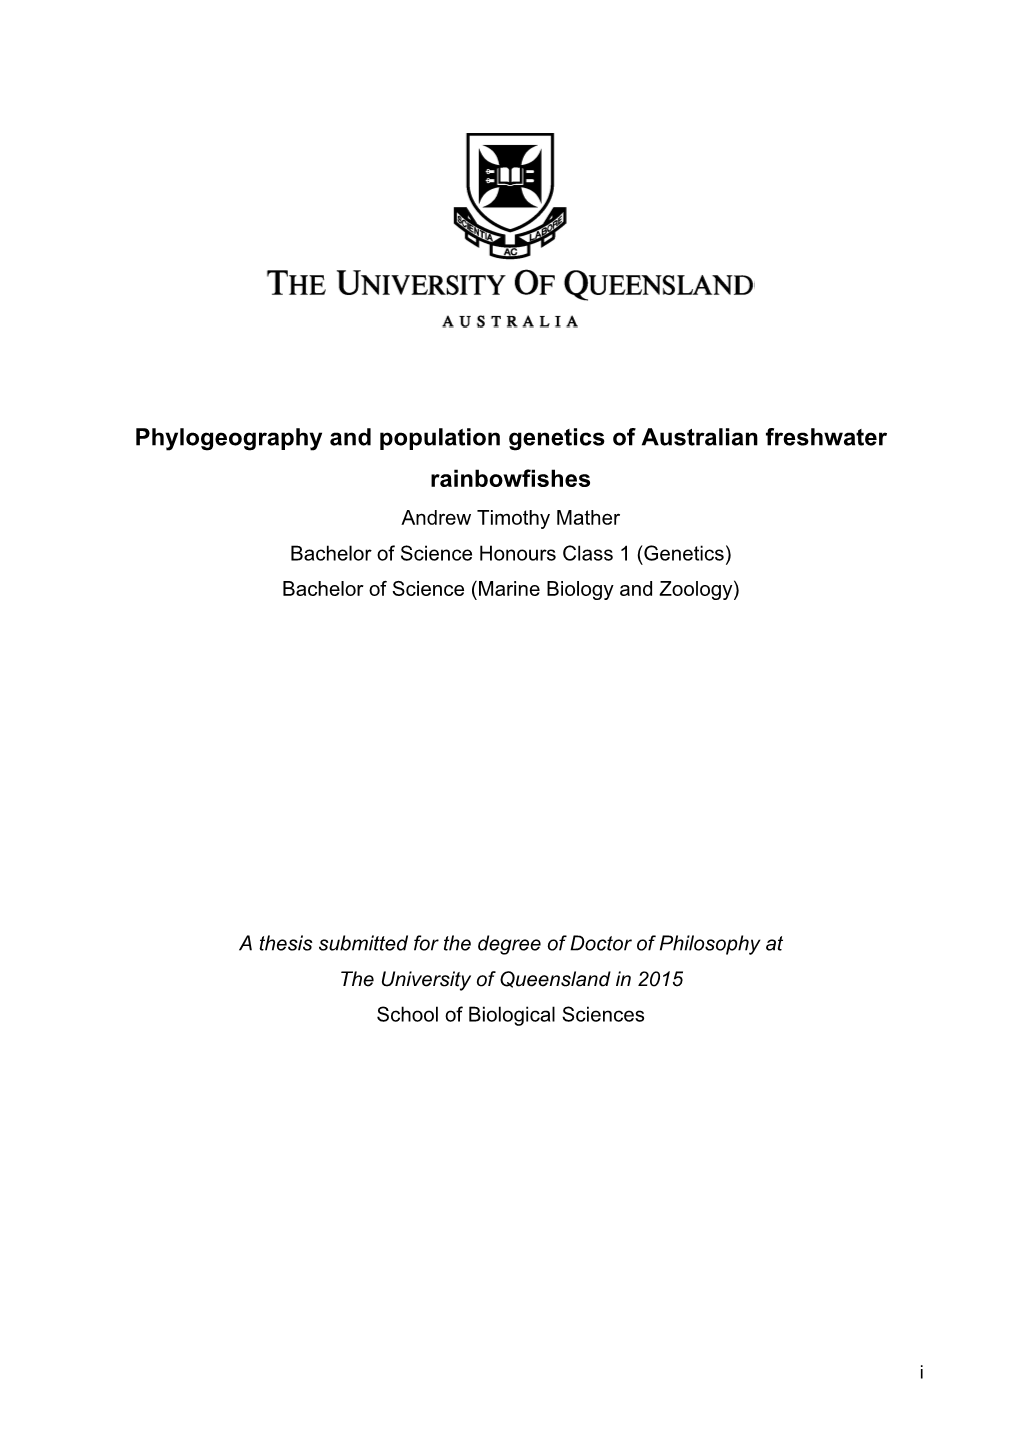 Phylogeography and Population Genetics of Australian Freshwater Rainbowfishes